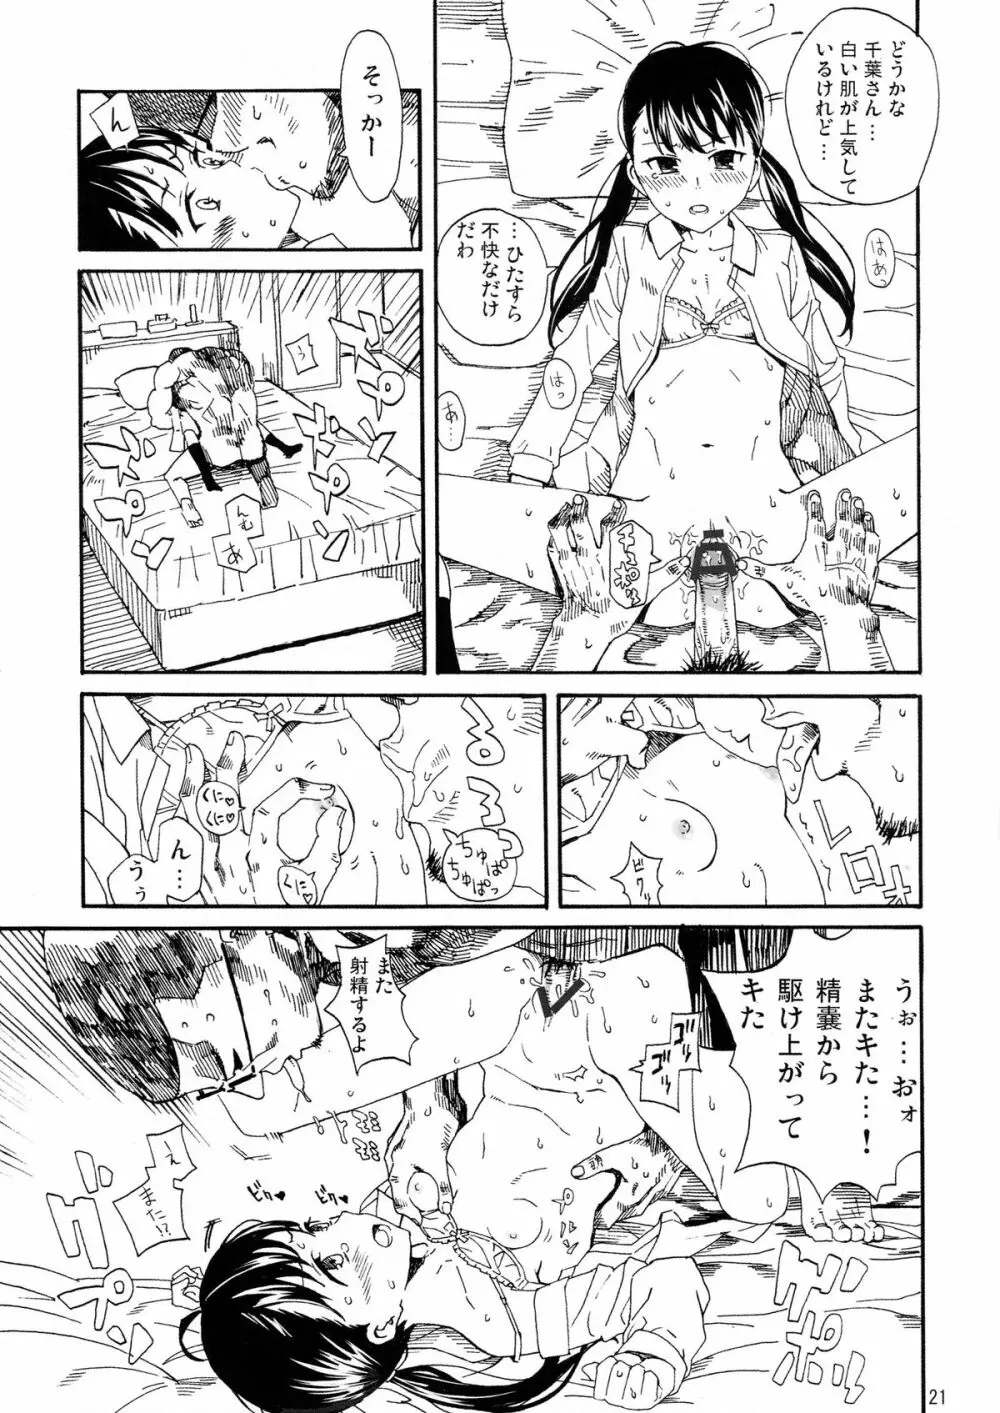 L'amant 千葉 - page21